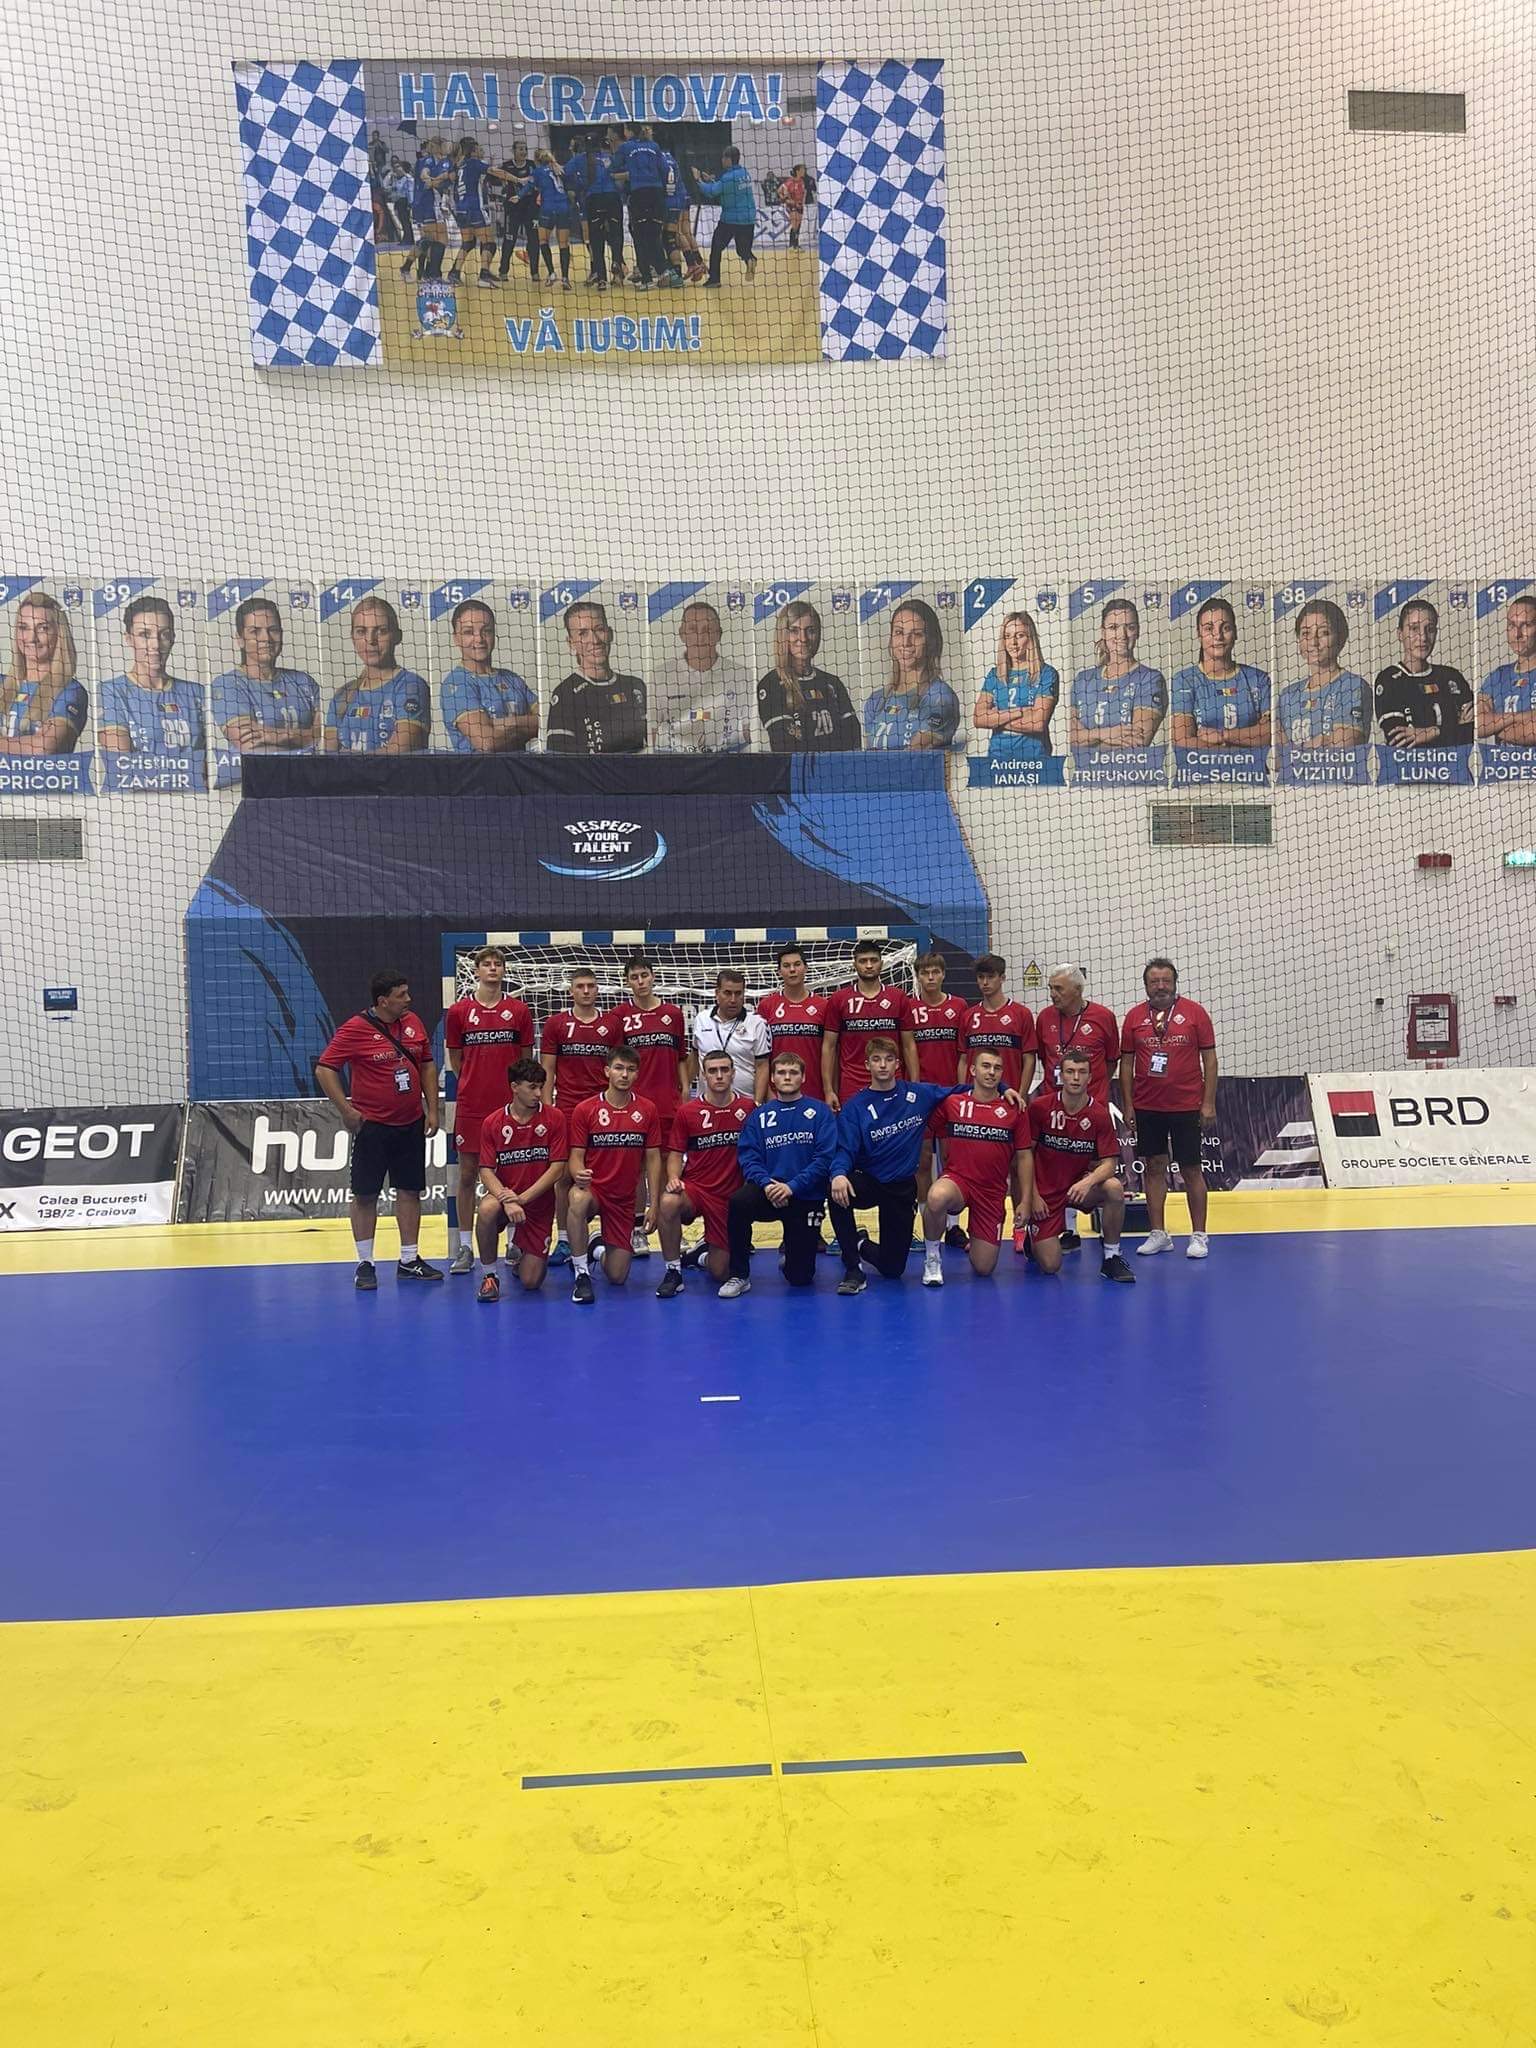 Campionatul European de Handbal(U18) in desfășurare activa!